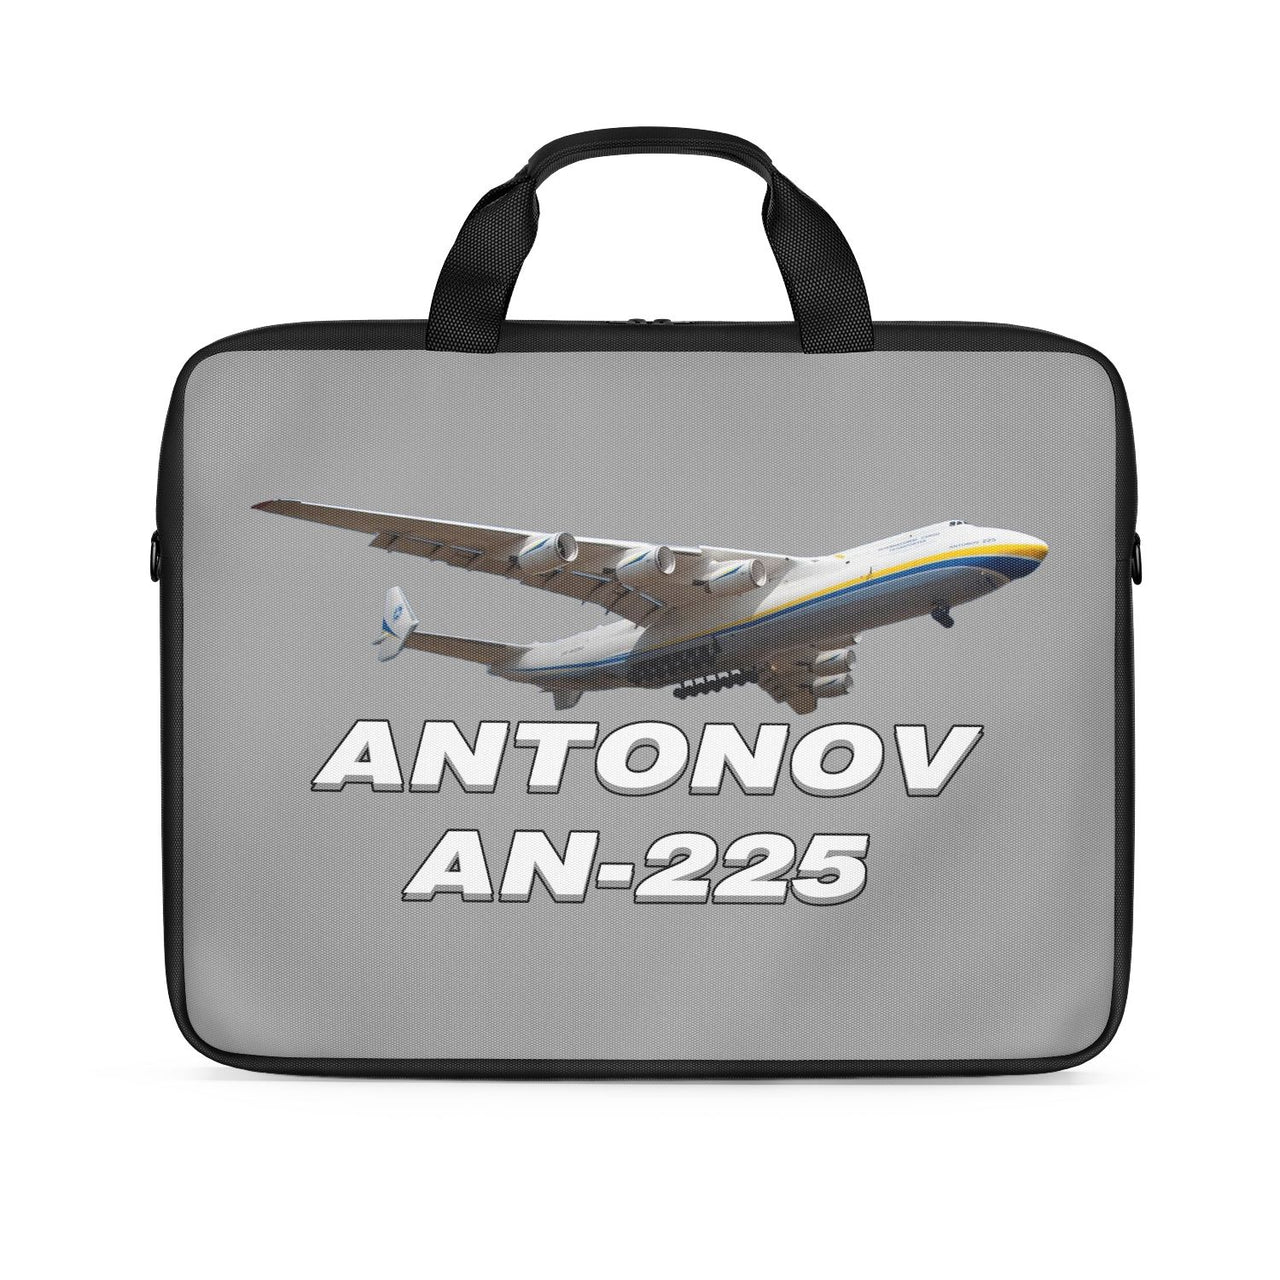 Antonov AN-225 (15) Designed Laptop & Tablet Bags